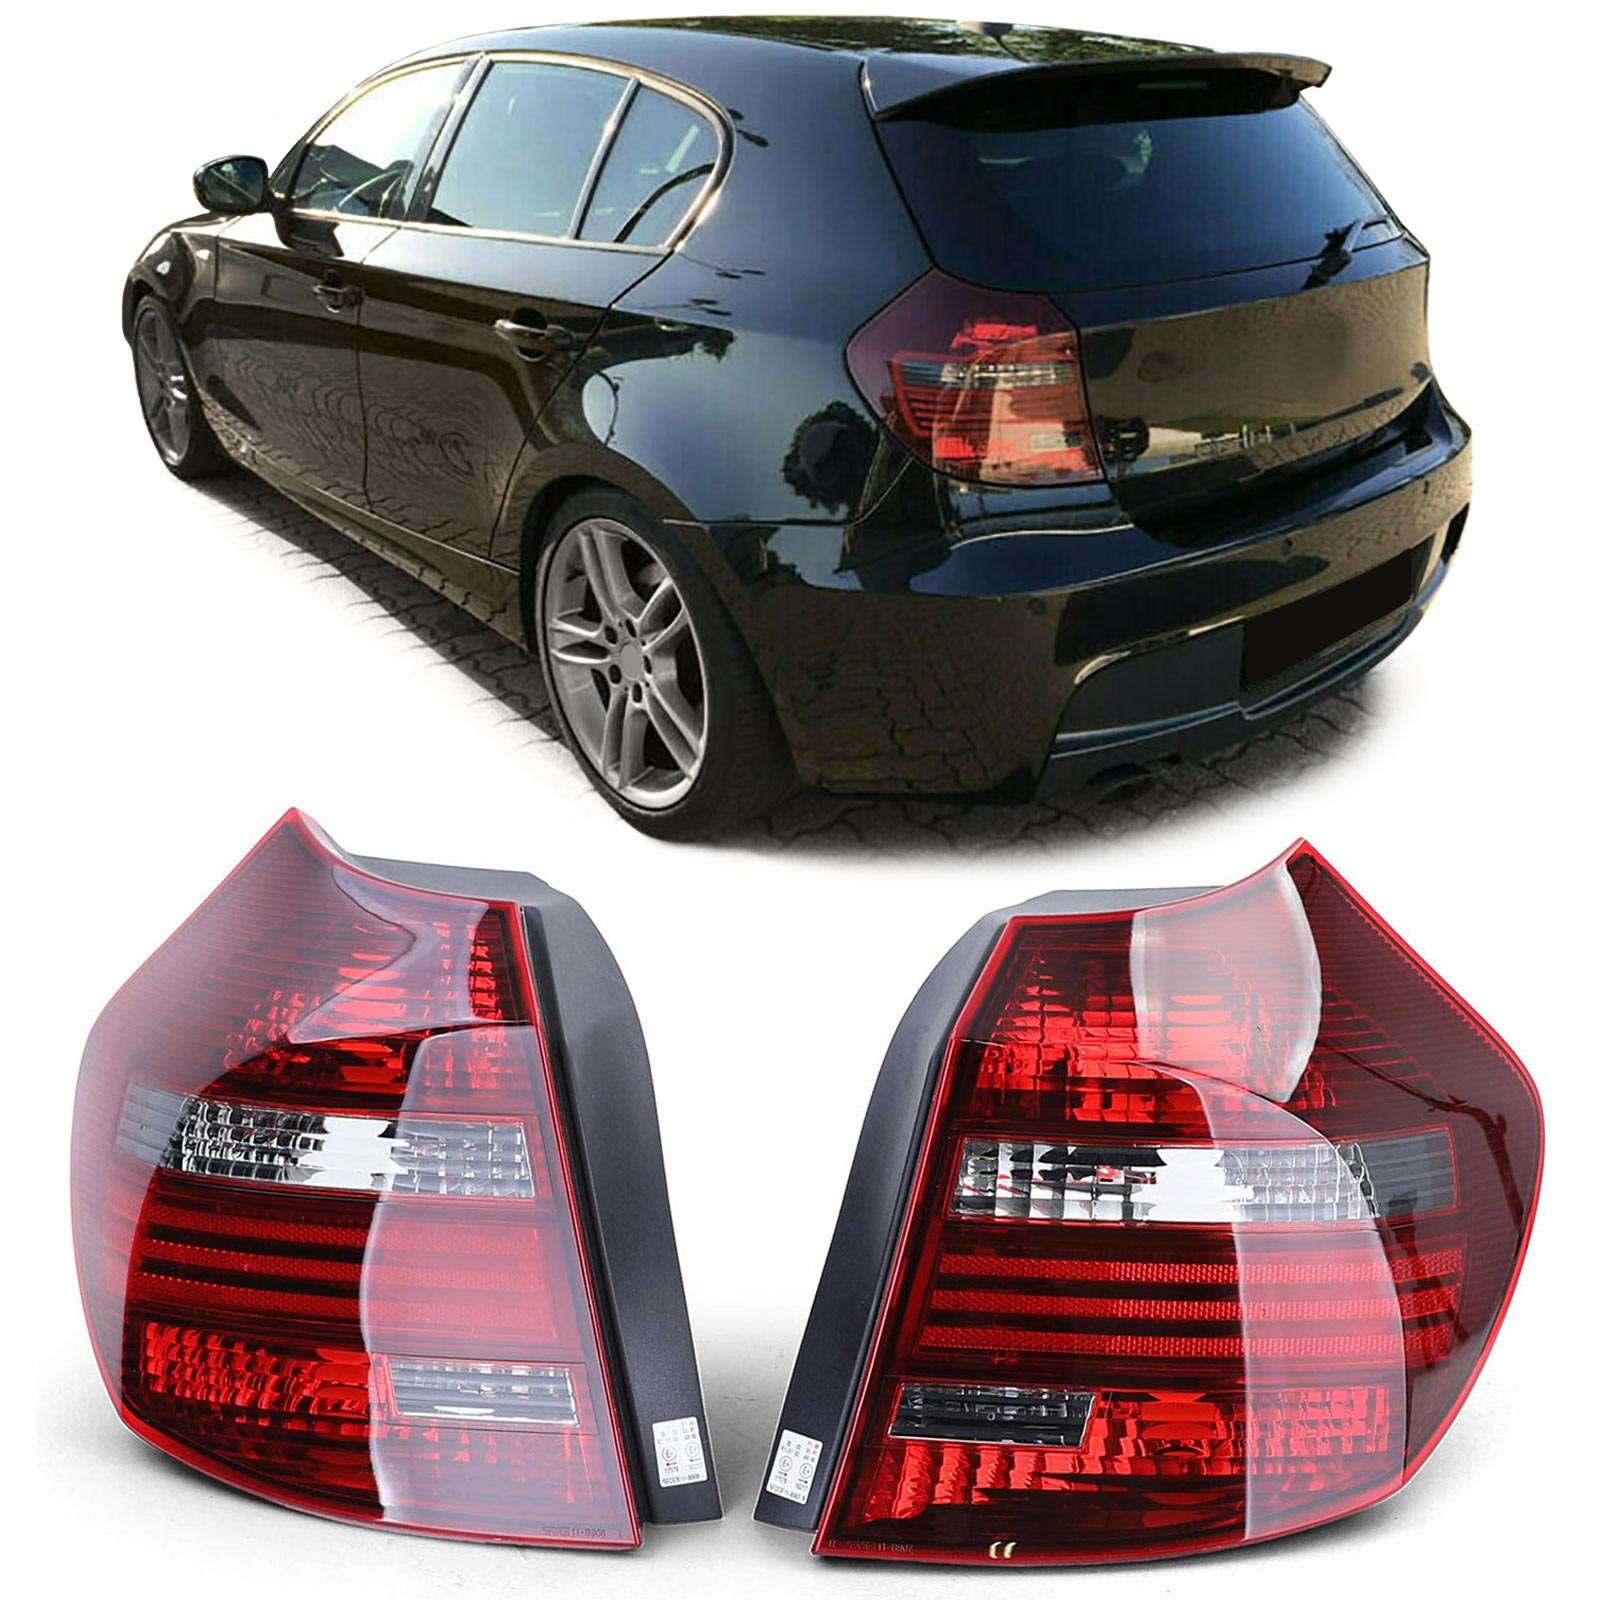 LED Kofferraum Beleuchtung für BMW 1er E81, E87, F20, F21